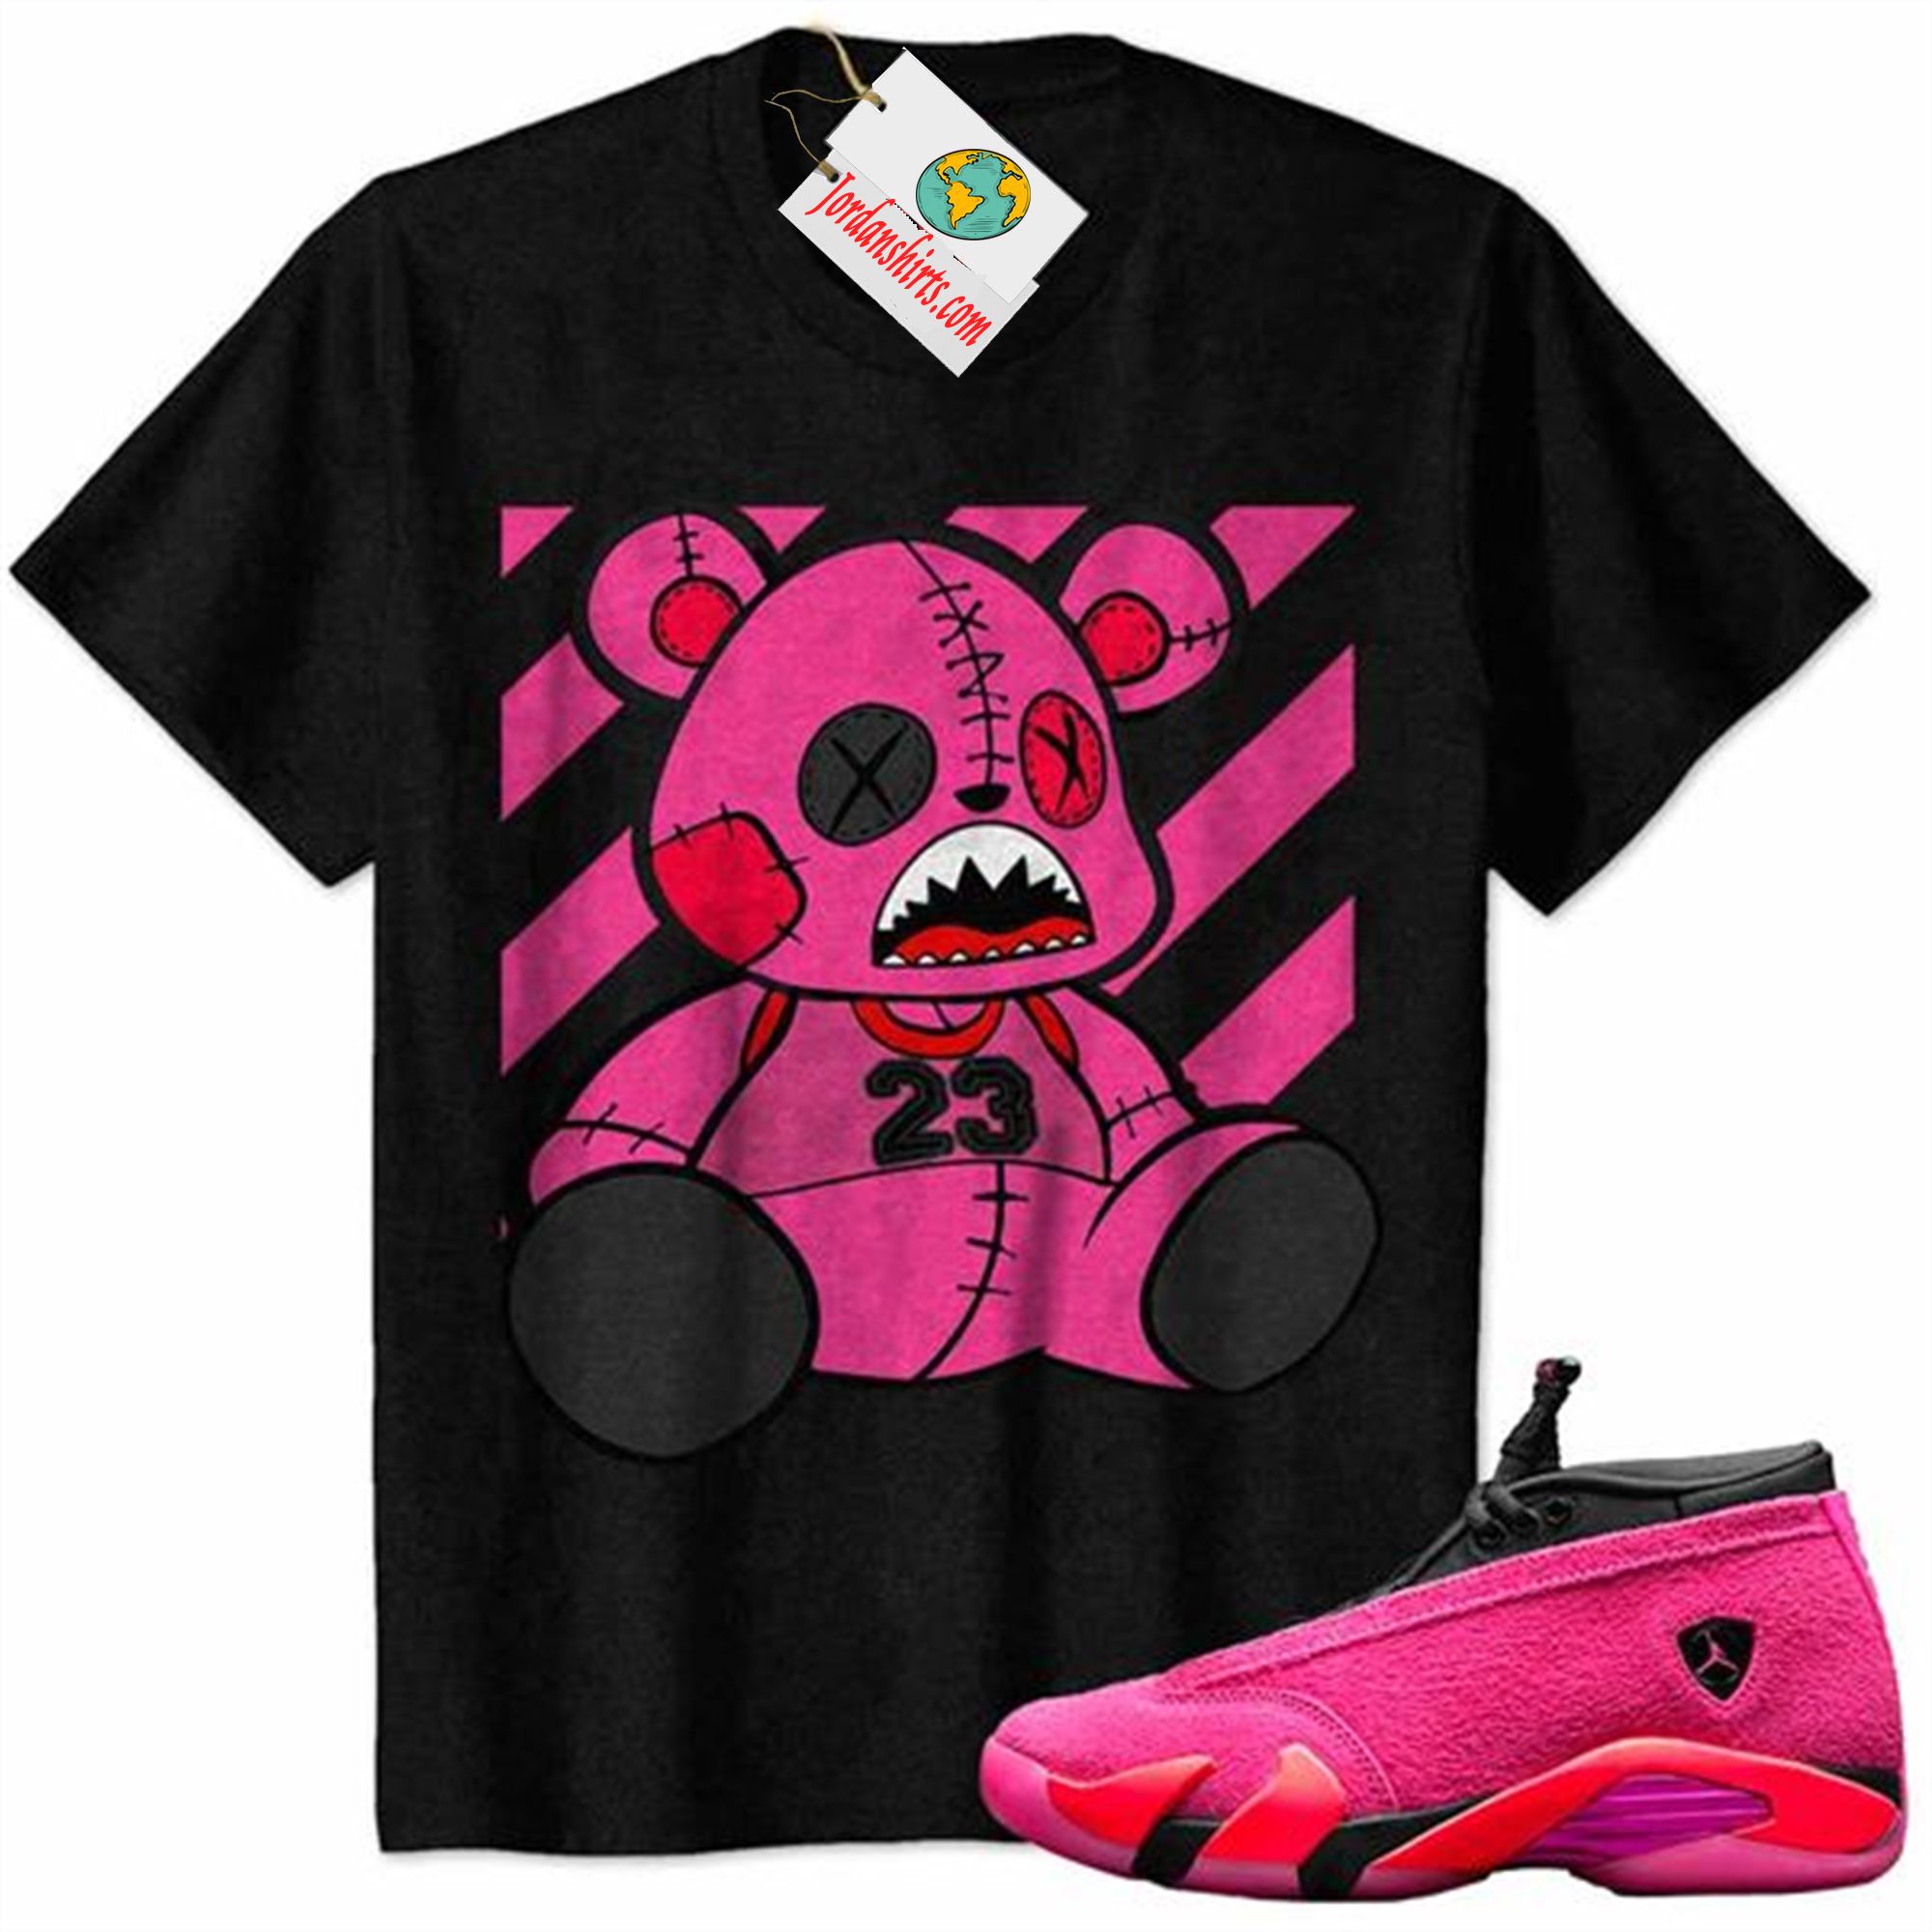 Jordan 14 Shirt, 23 Teddy Black Air Jordan 14 Wmns Shocking Pink 14s Plus Size Up To 5xl